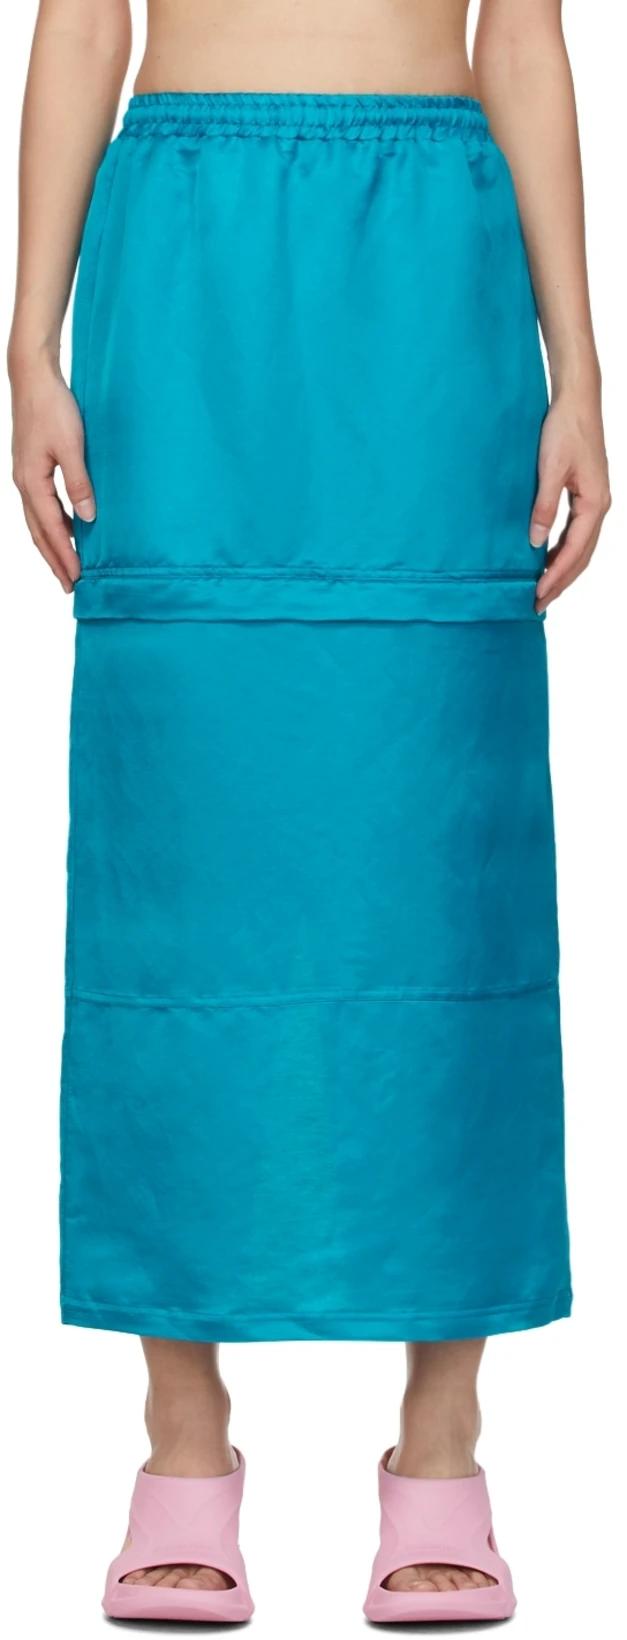 Blue Two-Way Zip Skirt by BONBOM